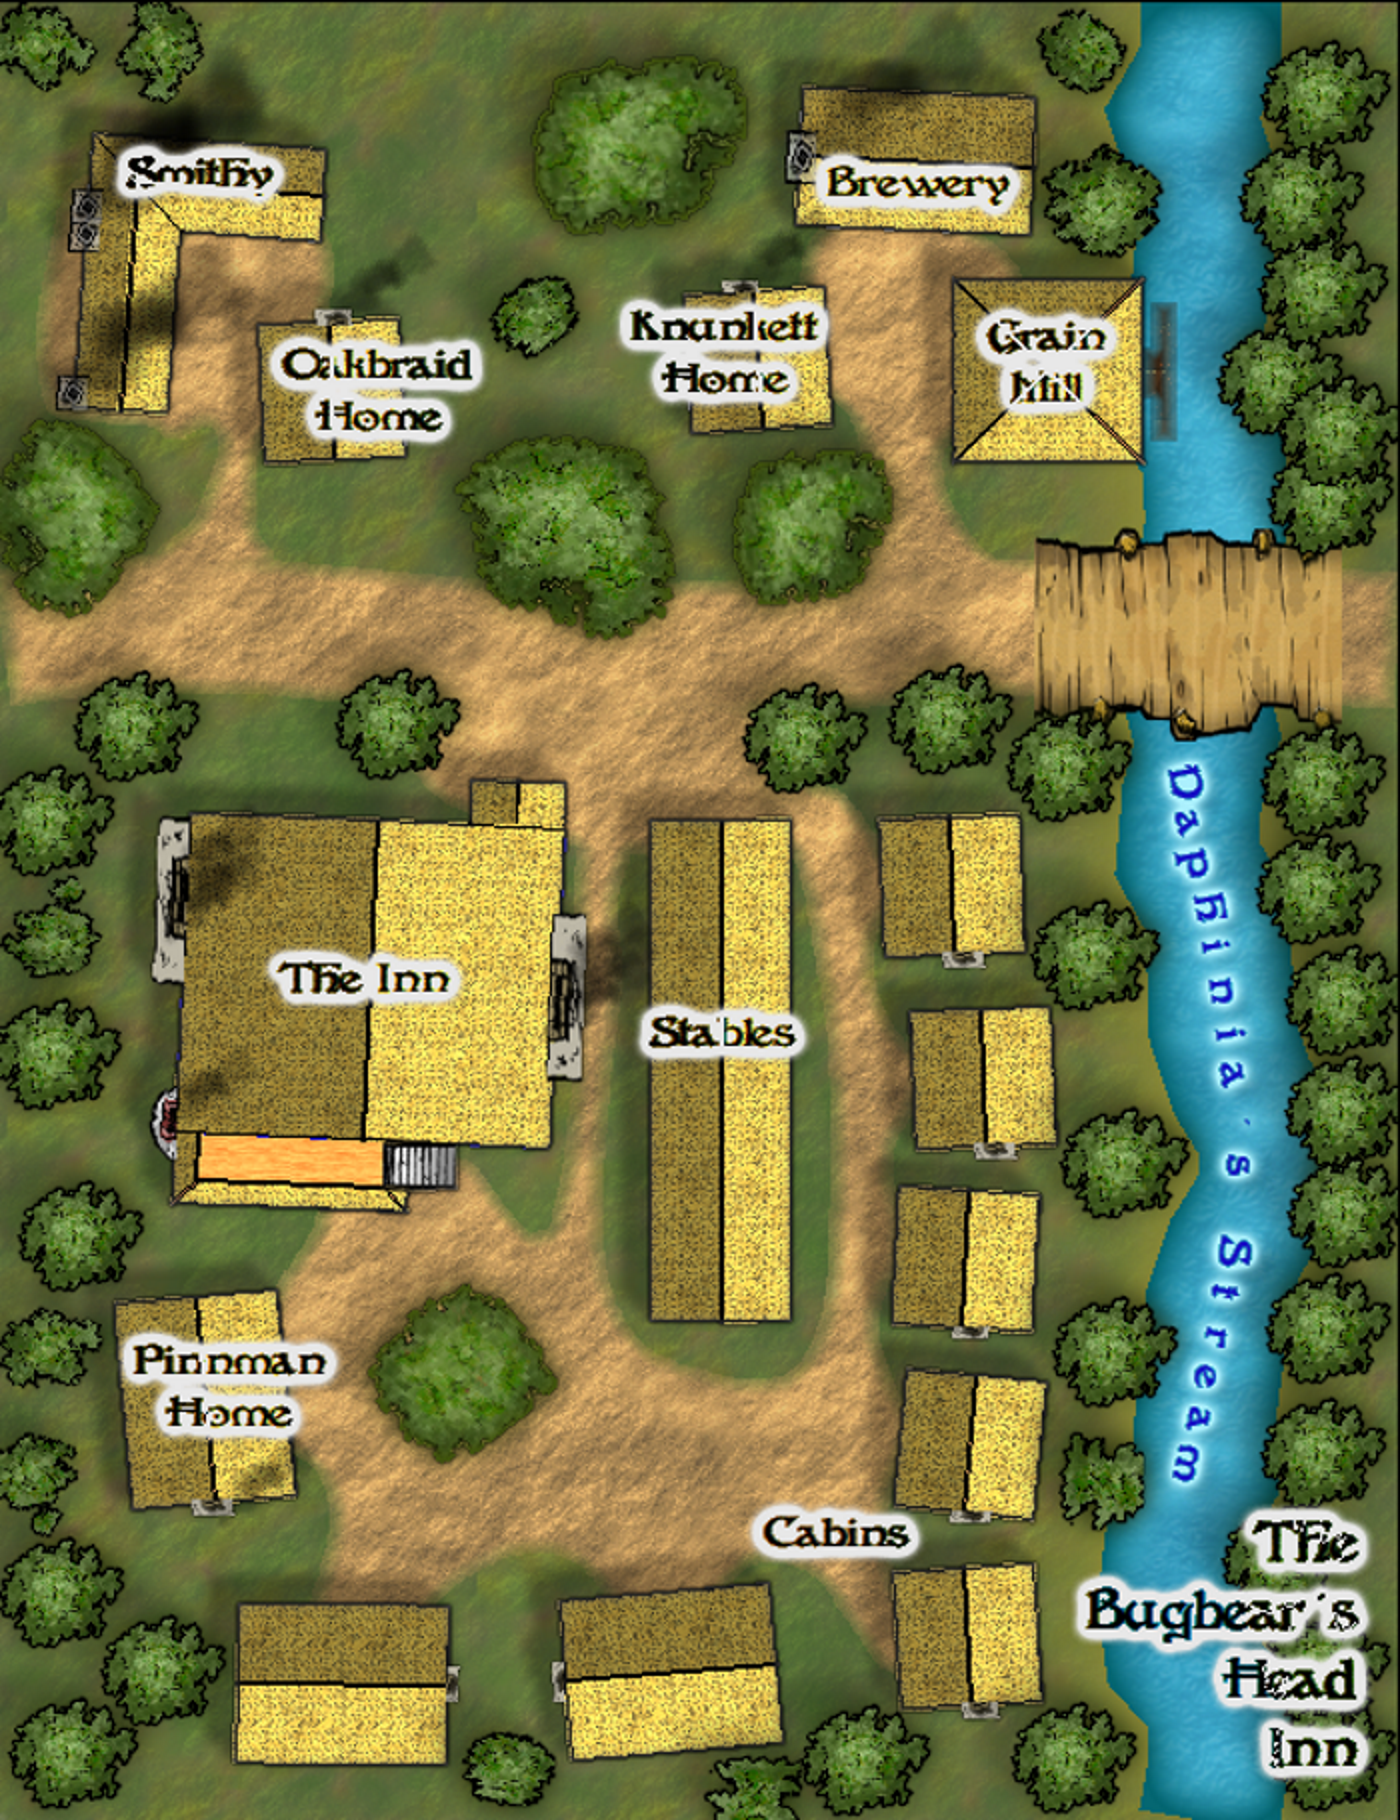 The Bugbear's Head Inn Base Map Image